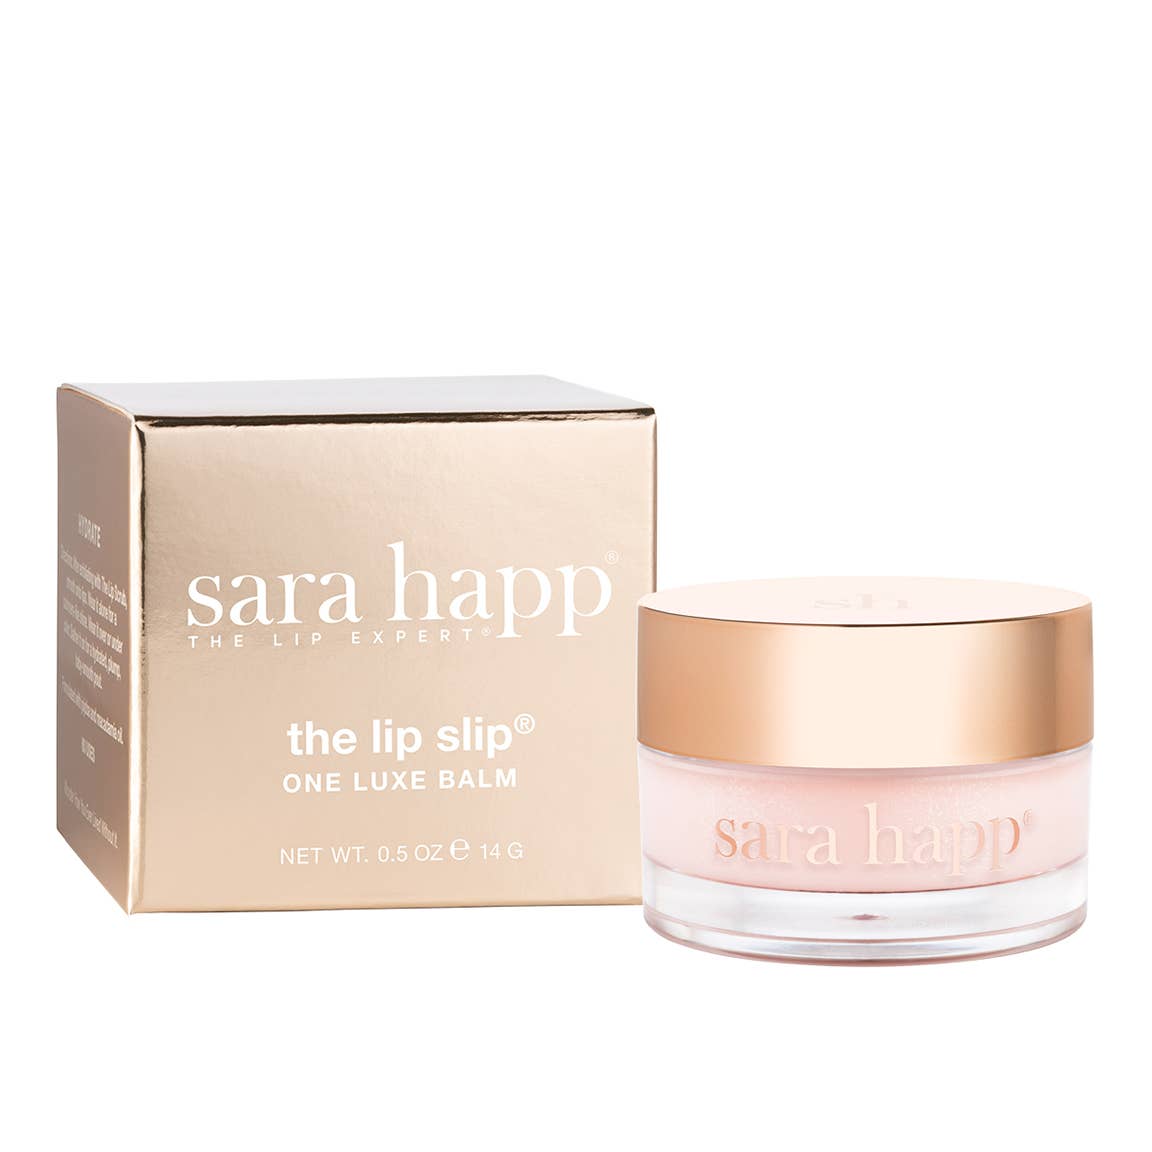 The Lip Slip - One Luxe Balm